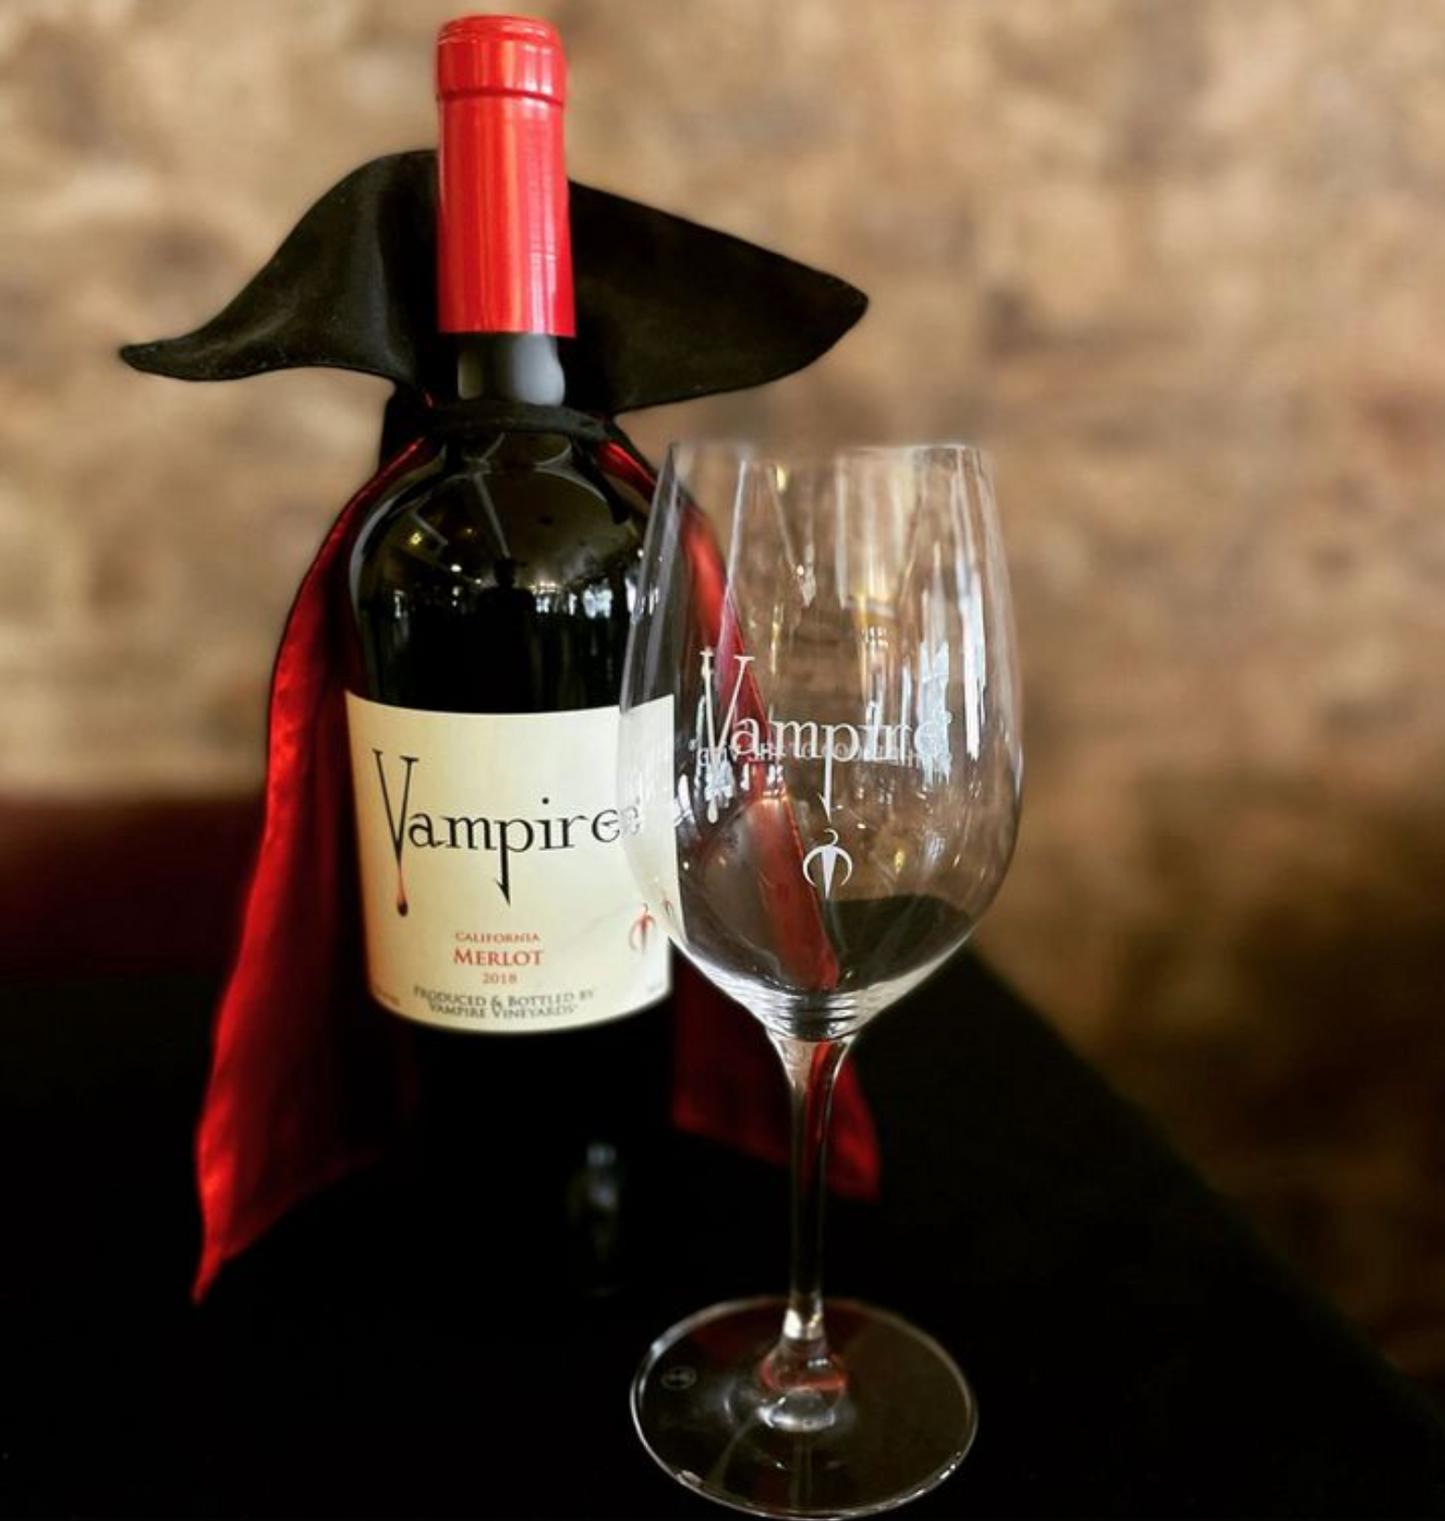 VAMPIRE® MERLOT WITH COFFIN & CAPE